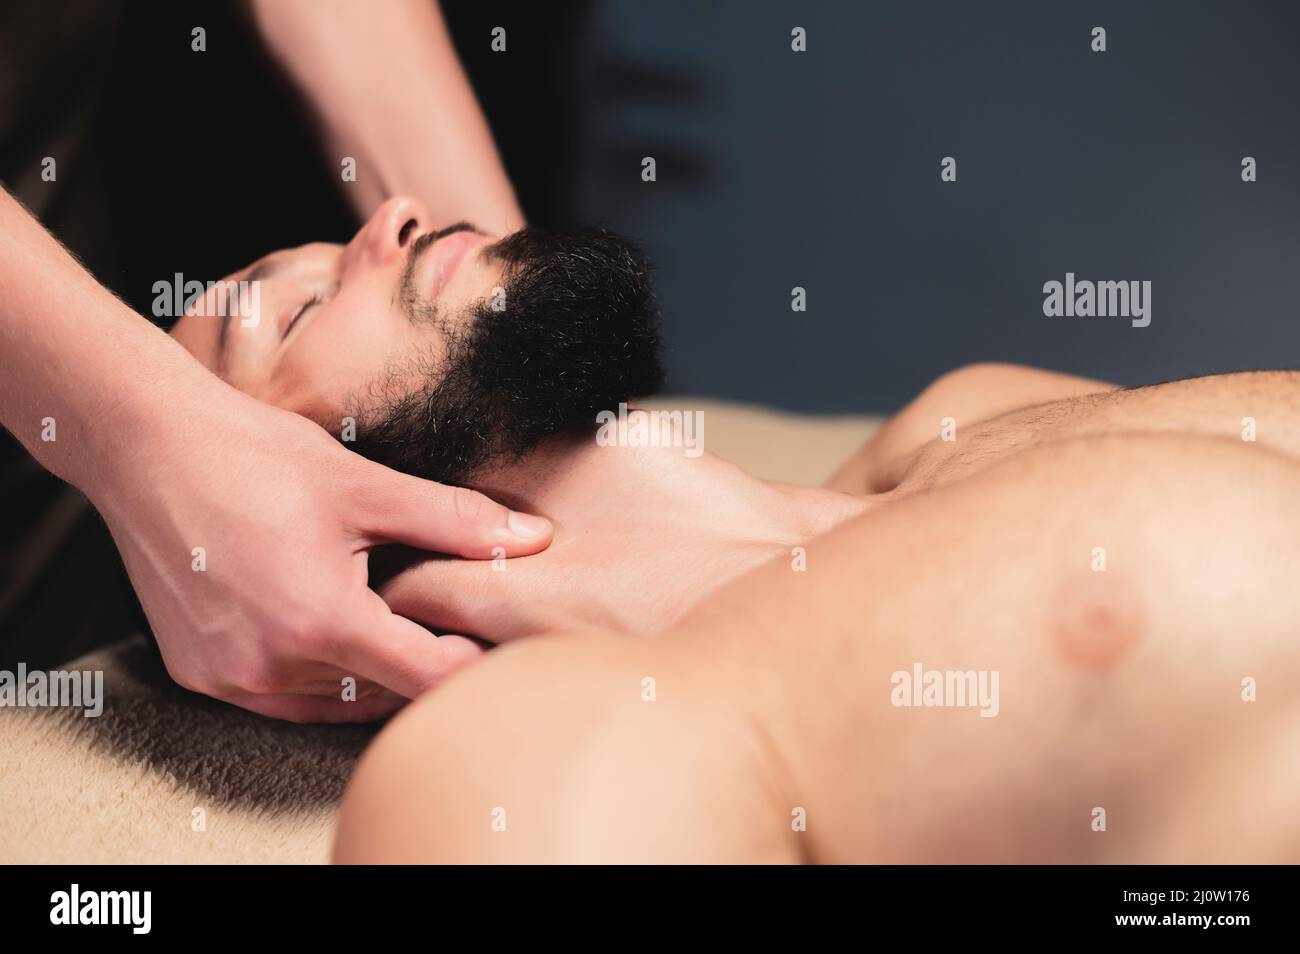 A male massage therapist makes a client athlete a man a neck massage in a dark cozy spa massage salon. Professional sports massa Stock Photo